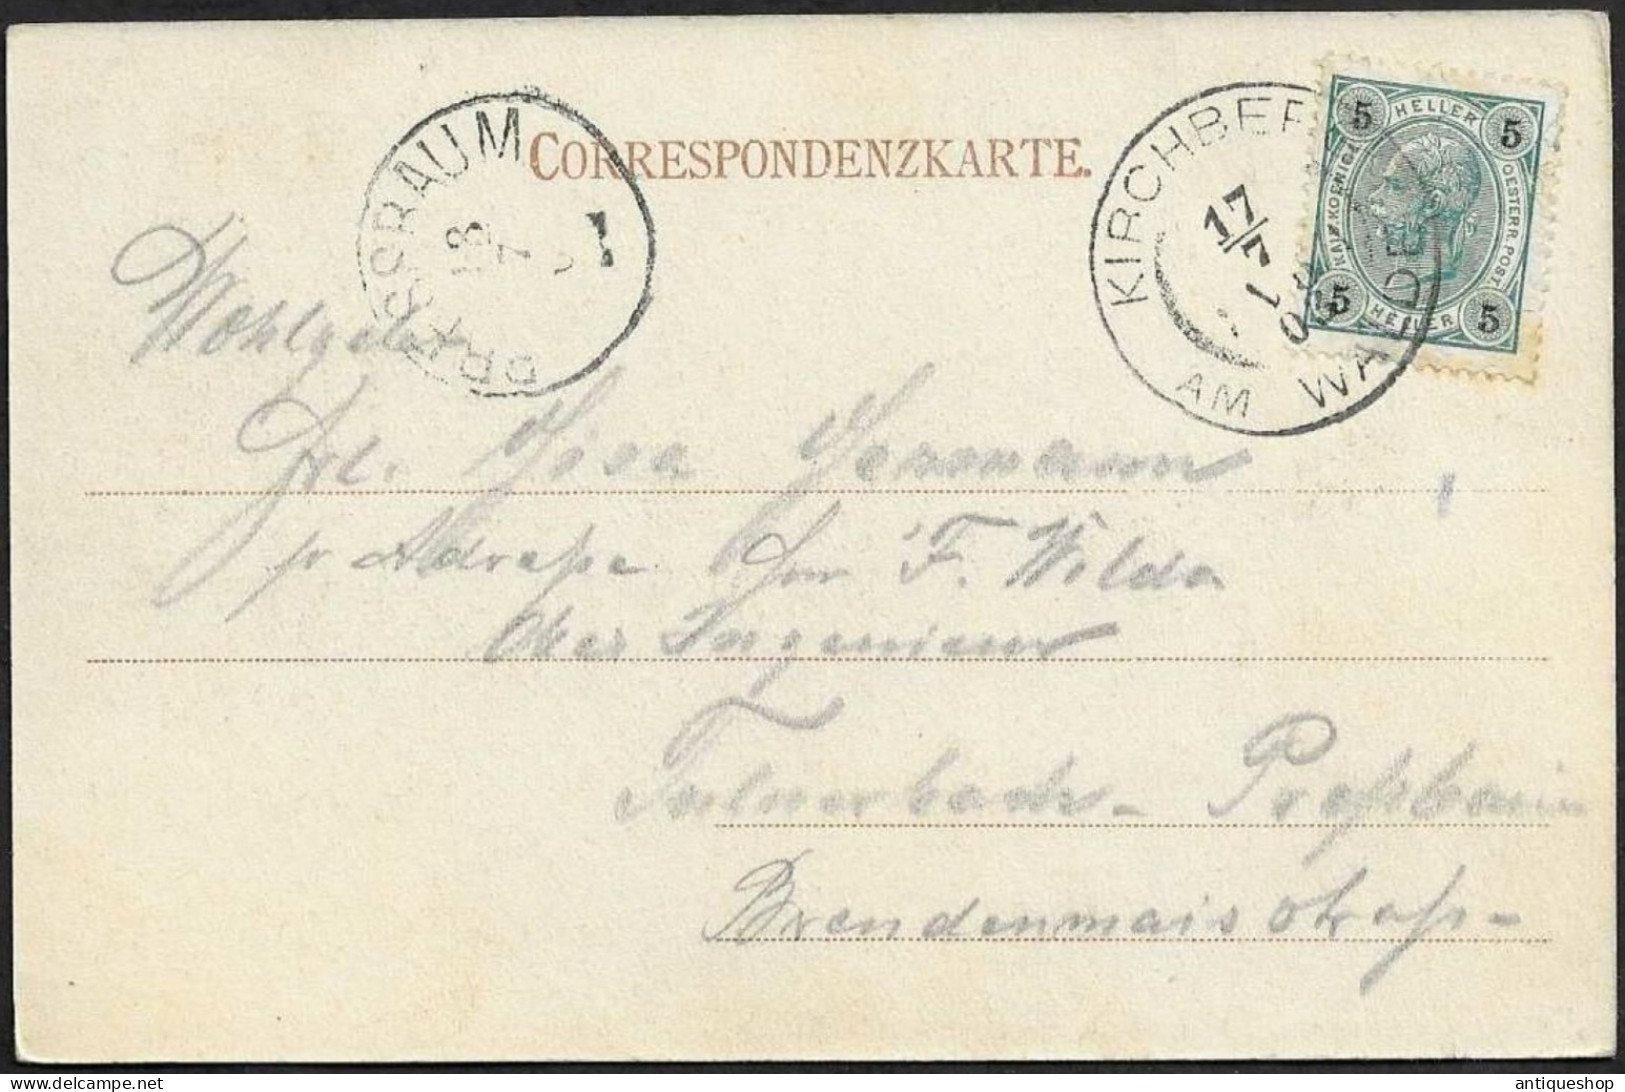 Germany-----Kirchberg Im Wald----old Postcard - Regen